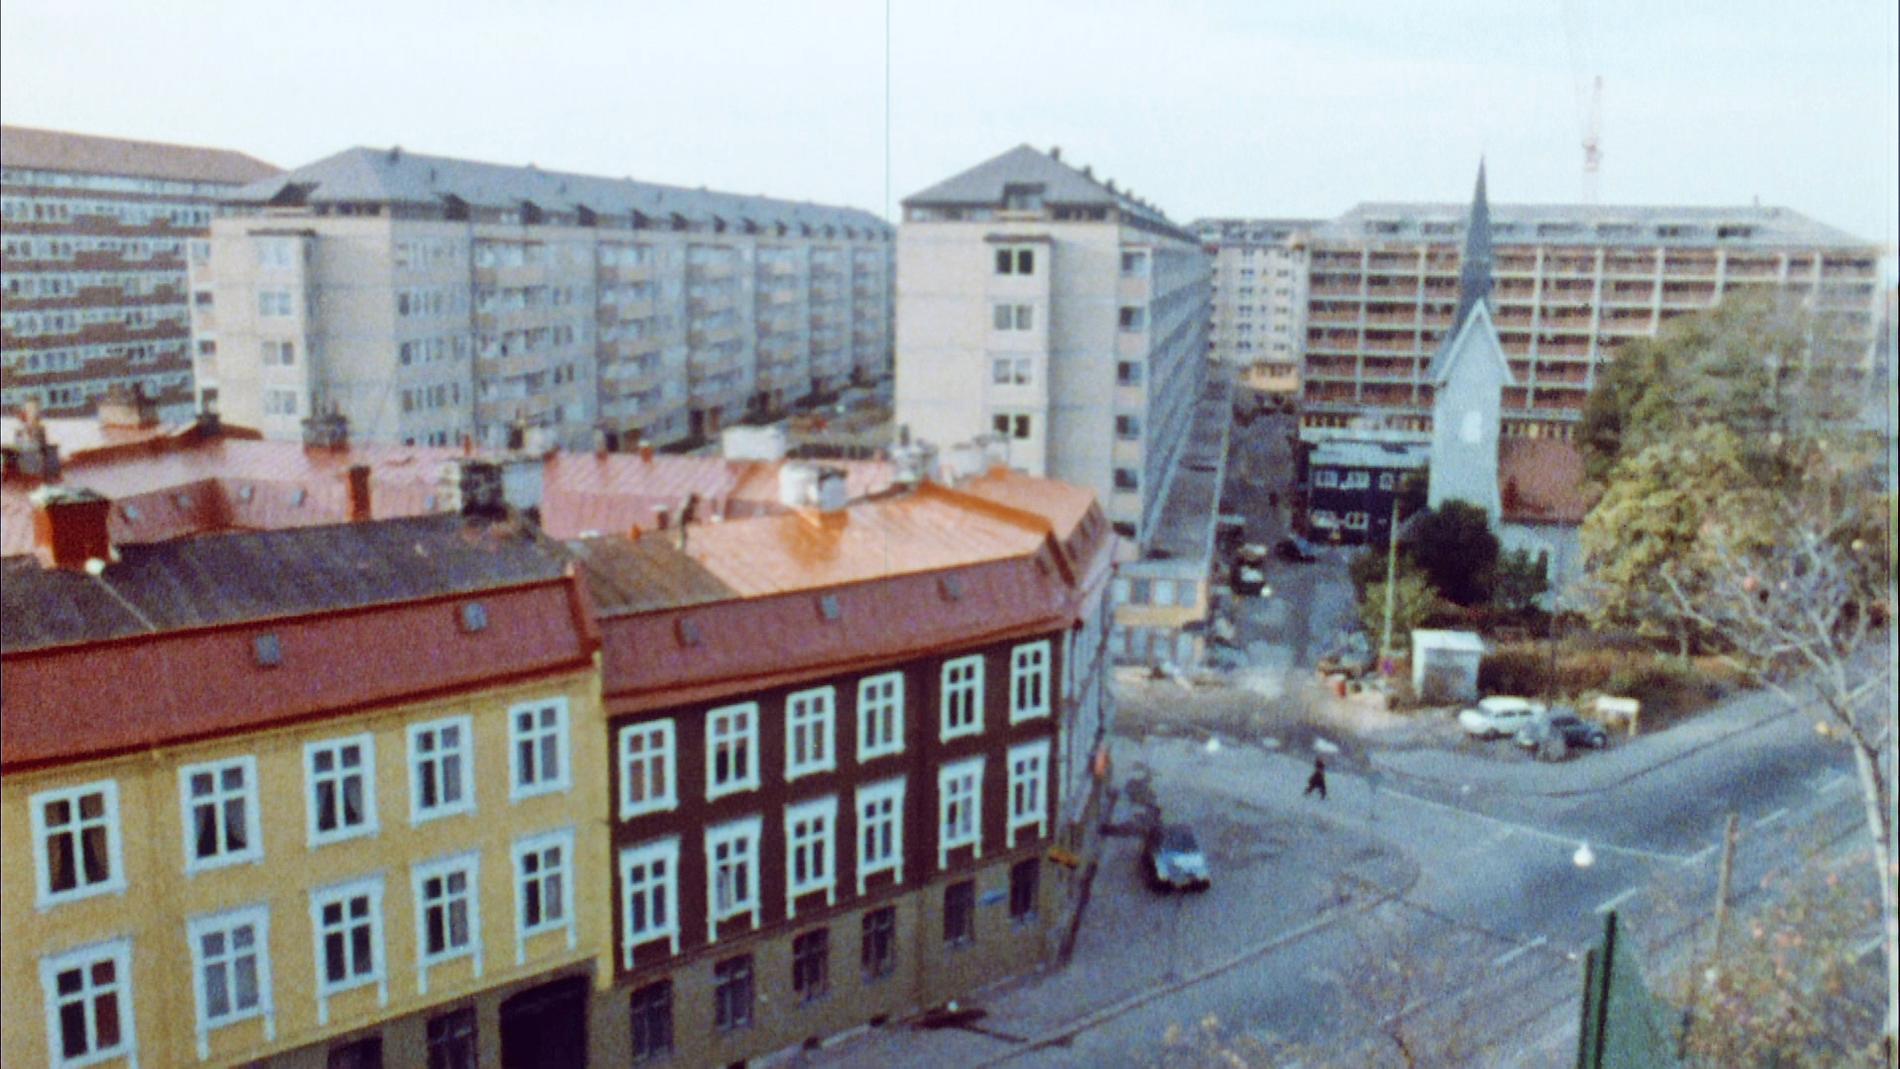 Olika typer av byggfilosofier möts i Landala i Göteborg.